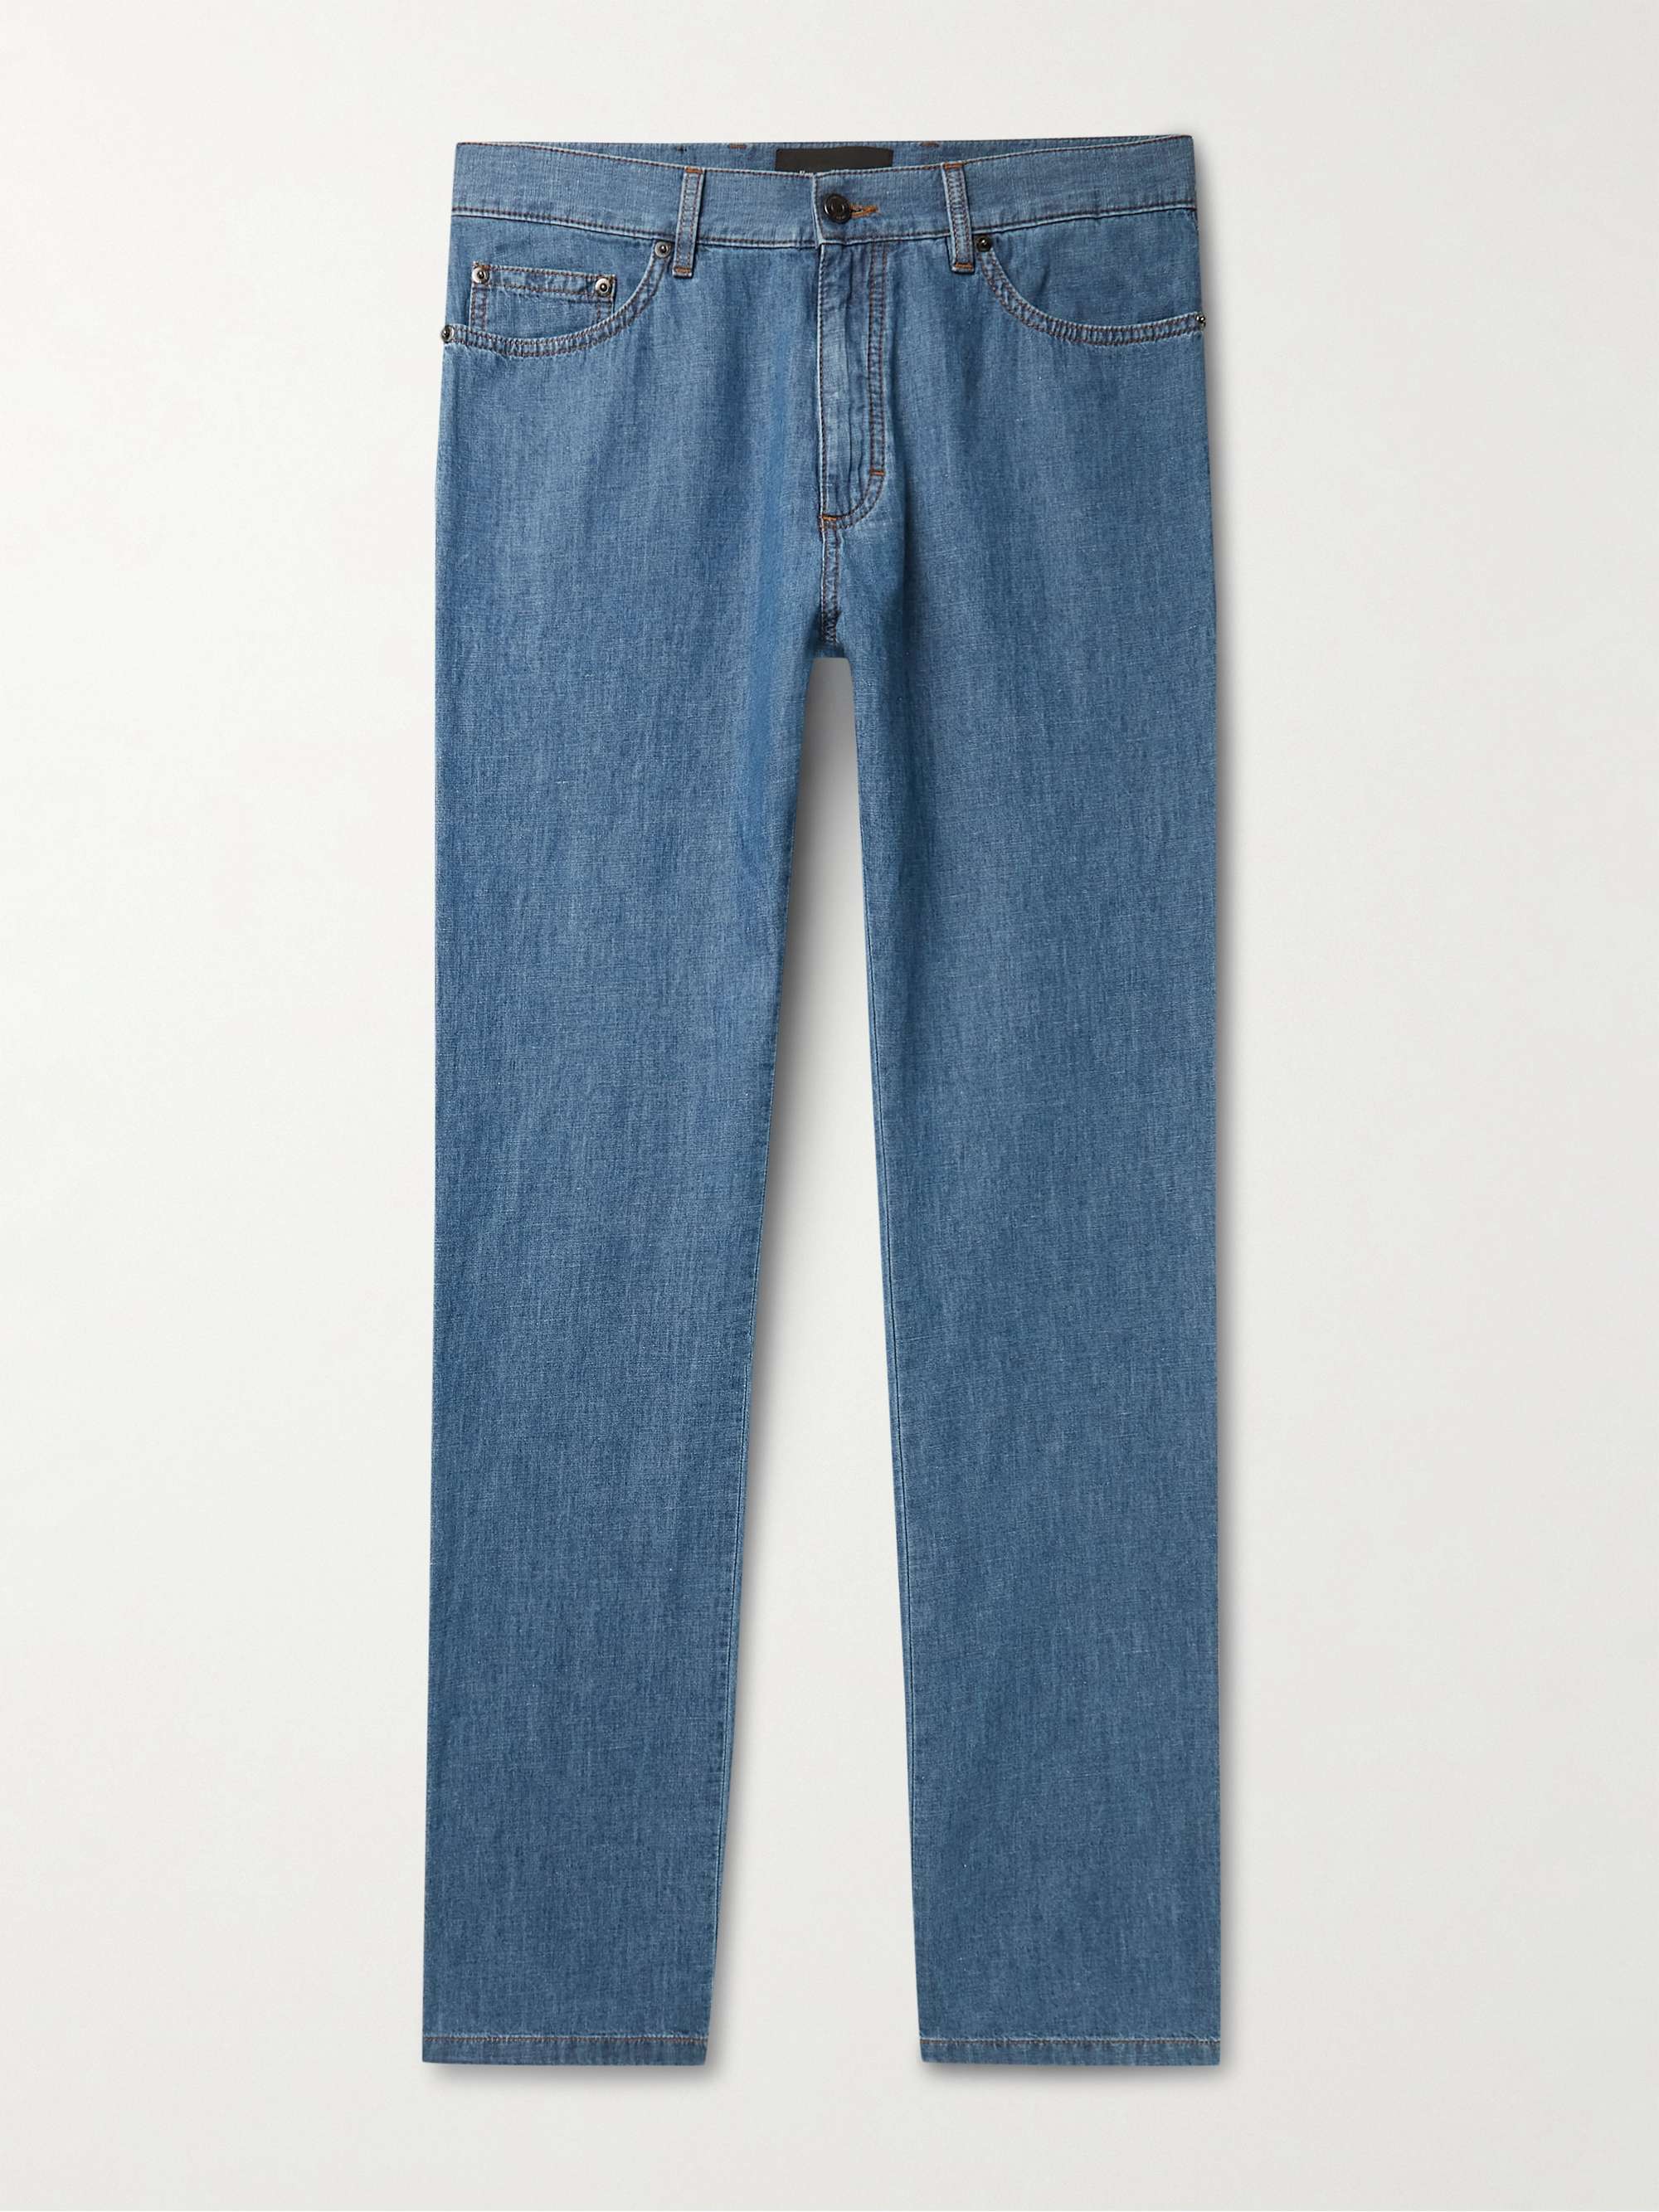 ZEGNA Straight-Leg Stone-Washed Jeans for Men | MR PORTER